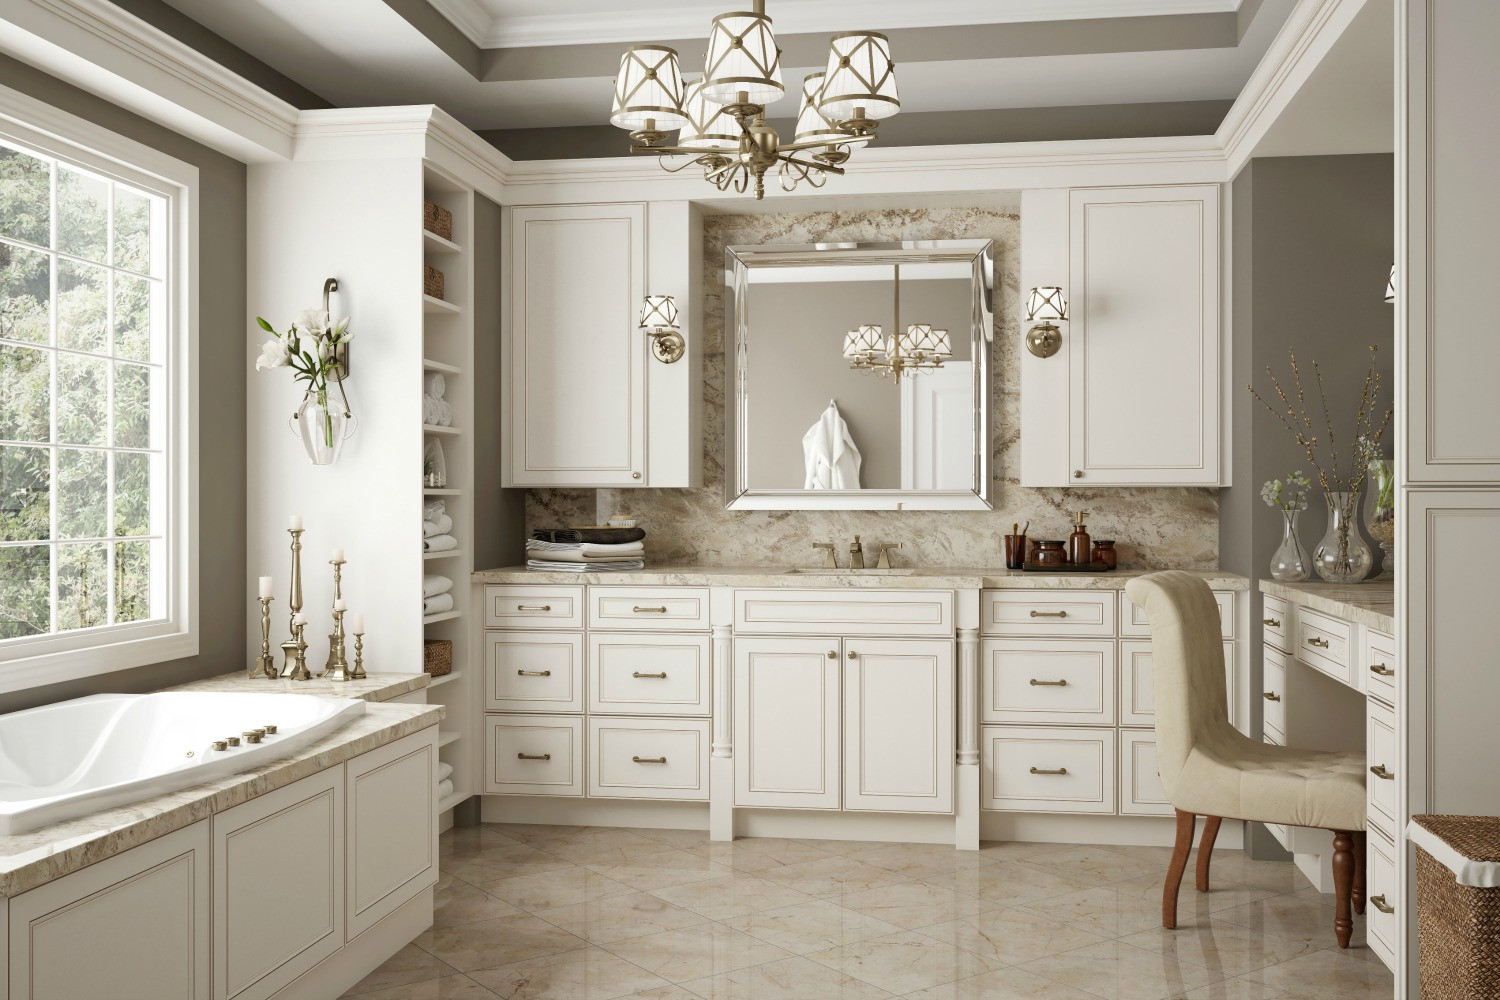 Antiqued Kitchen Cabinets
 Brantley Antique White Glaze Ready To Assemble Kitchen